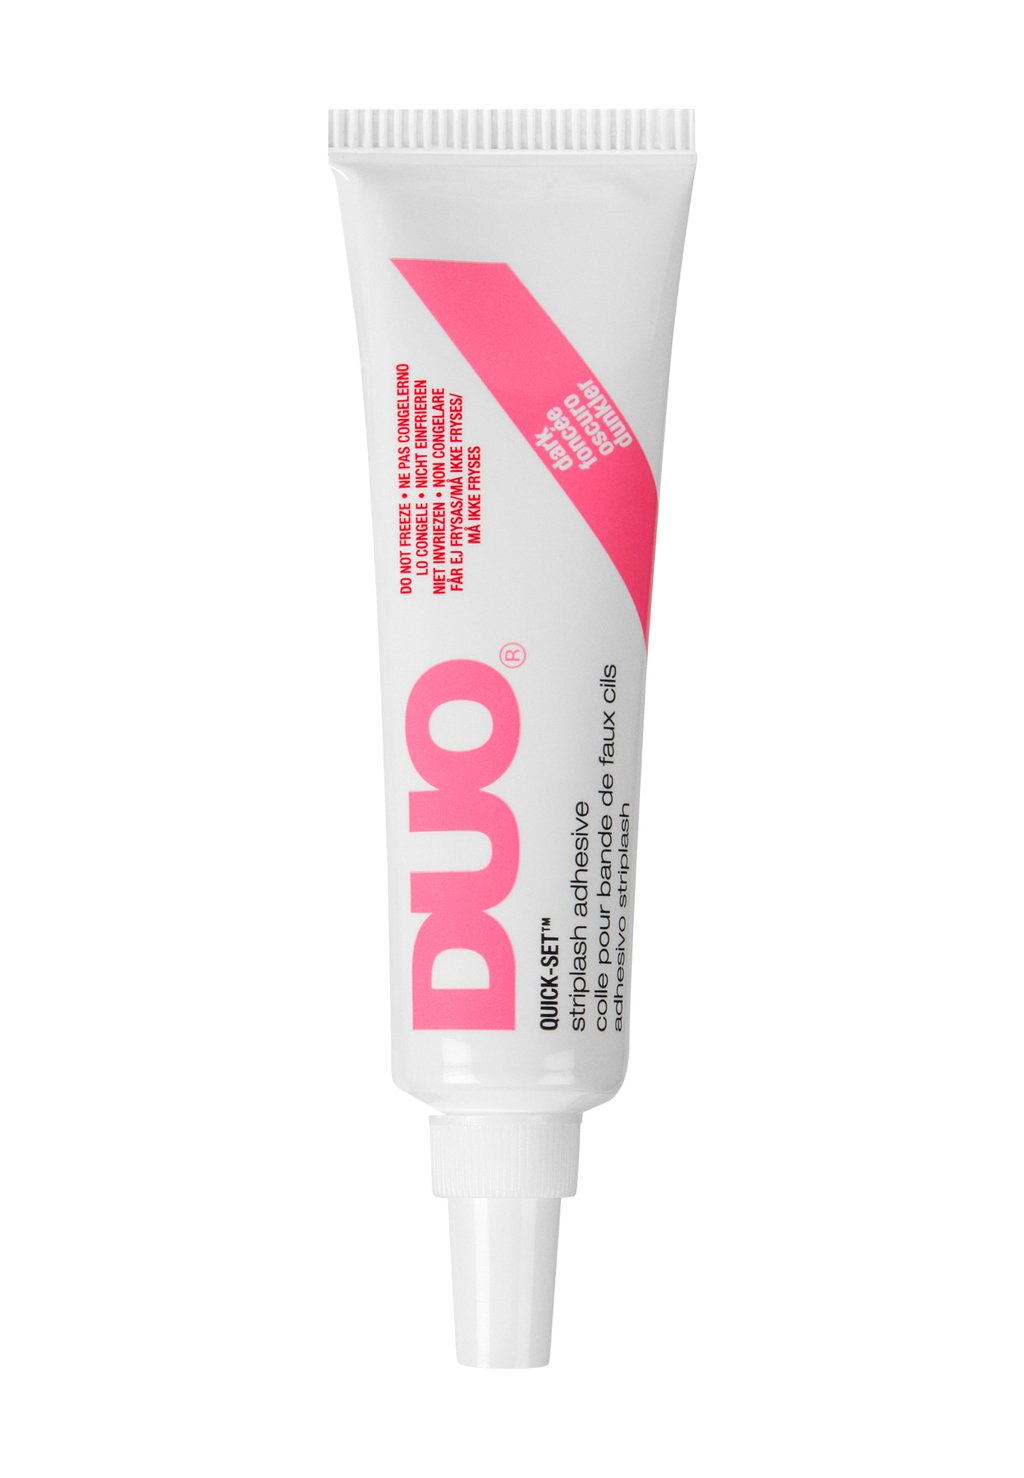 Накладные ресницы Duo Quick Set Dark (14G/0,50 Oz) DUO, цвет dark duo adhesive quick set clear 0 5 oz 14 g